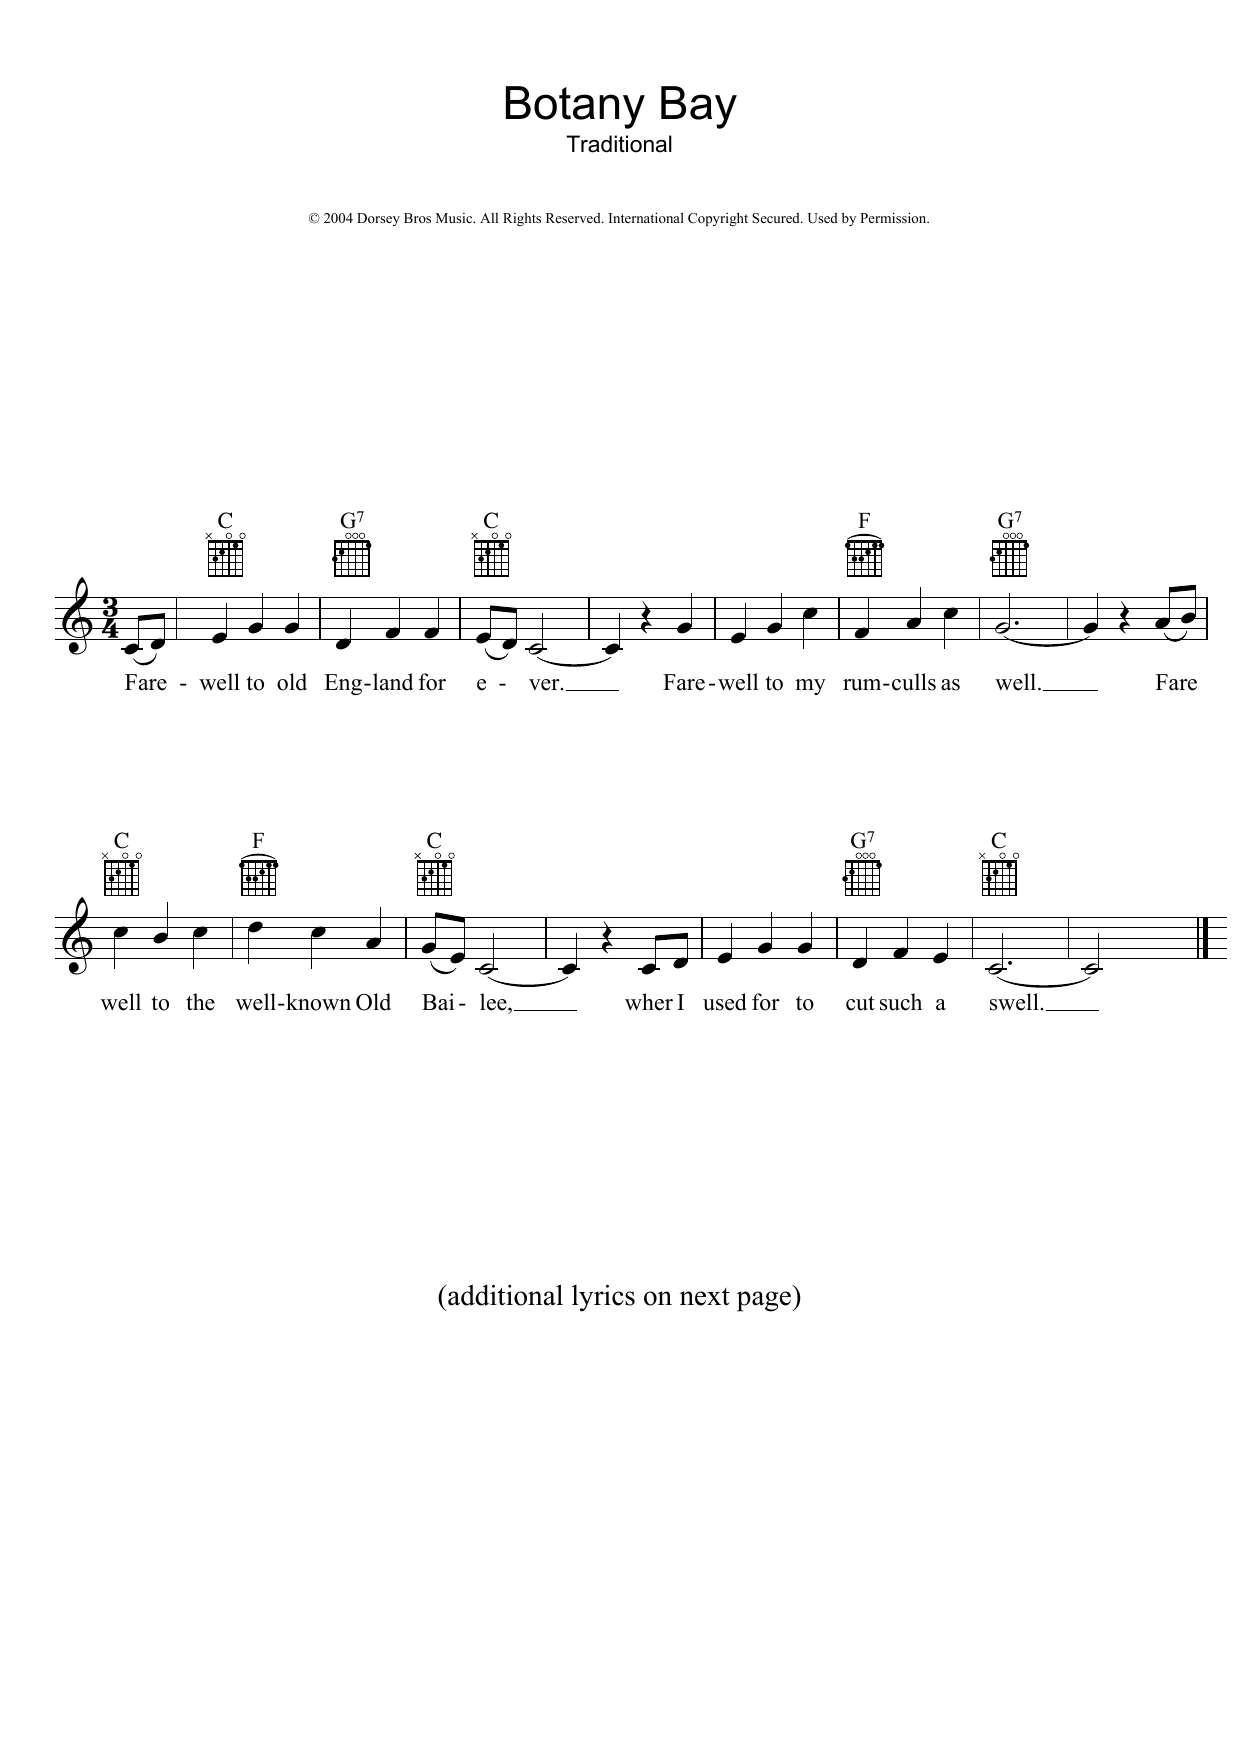 Australian Folksong Botany Bay Sheet Music Notes & Chords for Melody Line, Lyrics & Chords - Download or Print PDF